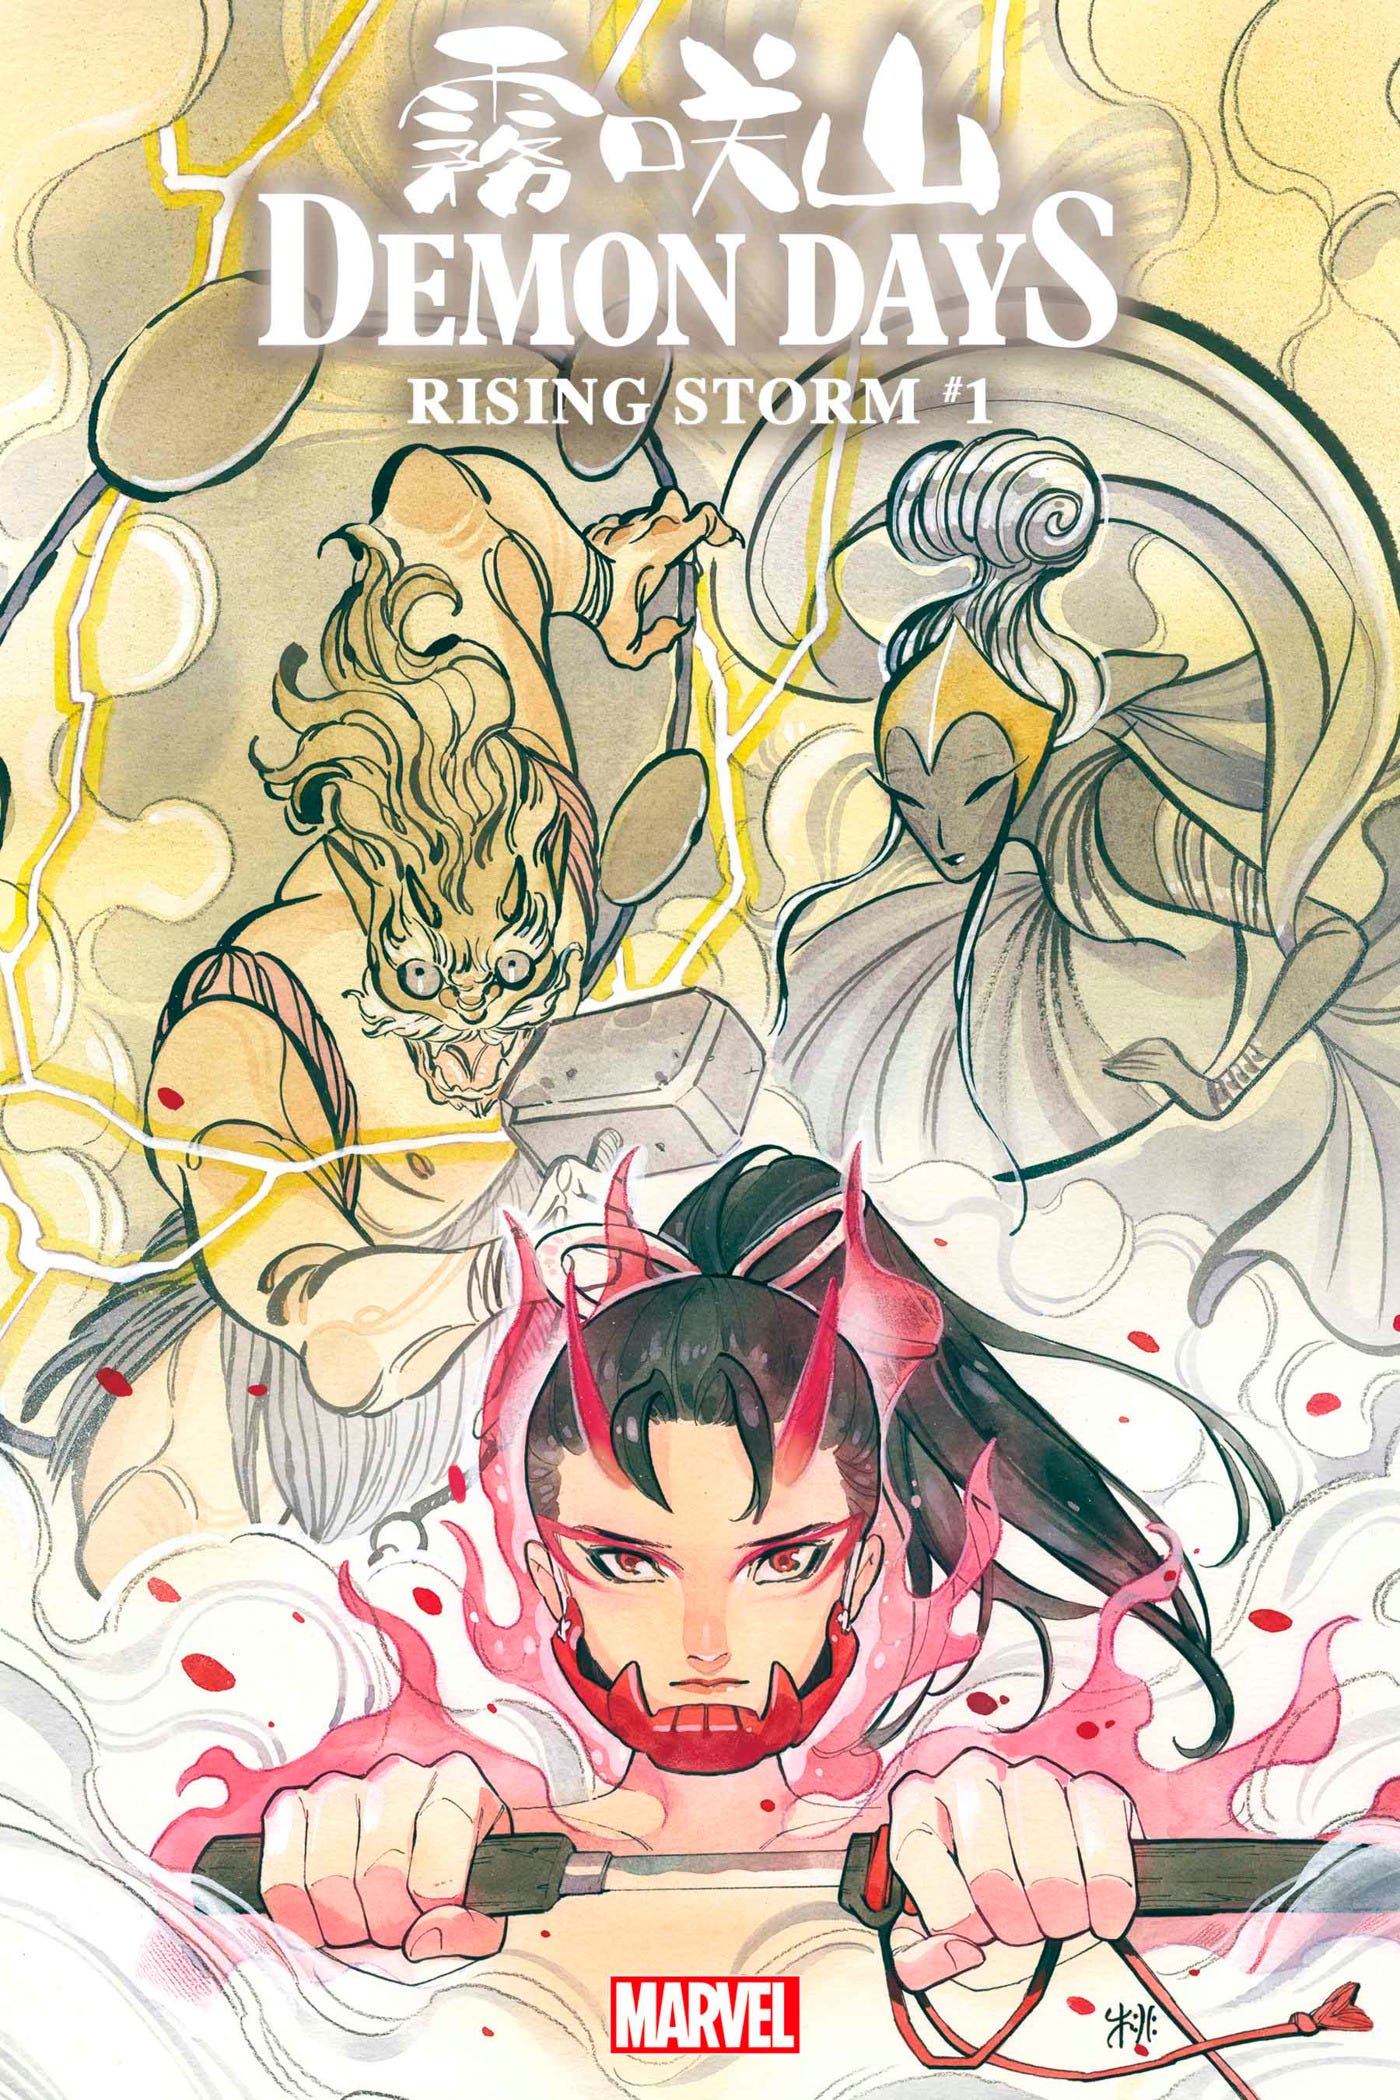 Demon Days Rising Storm #1